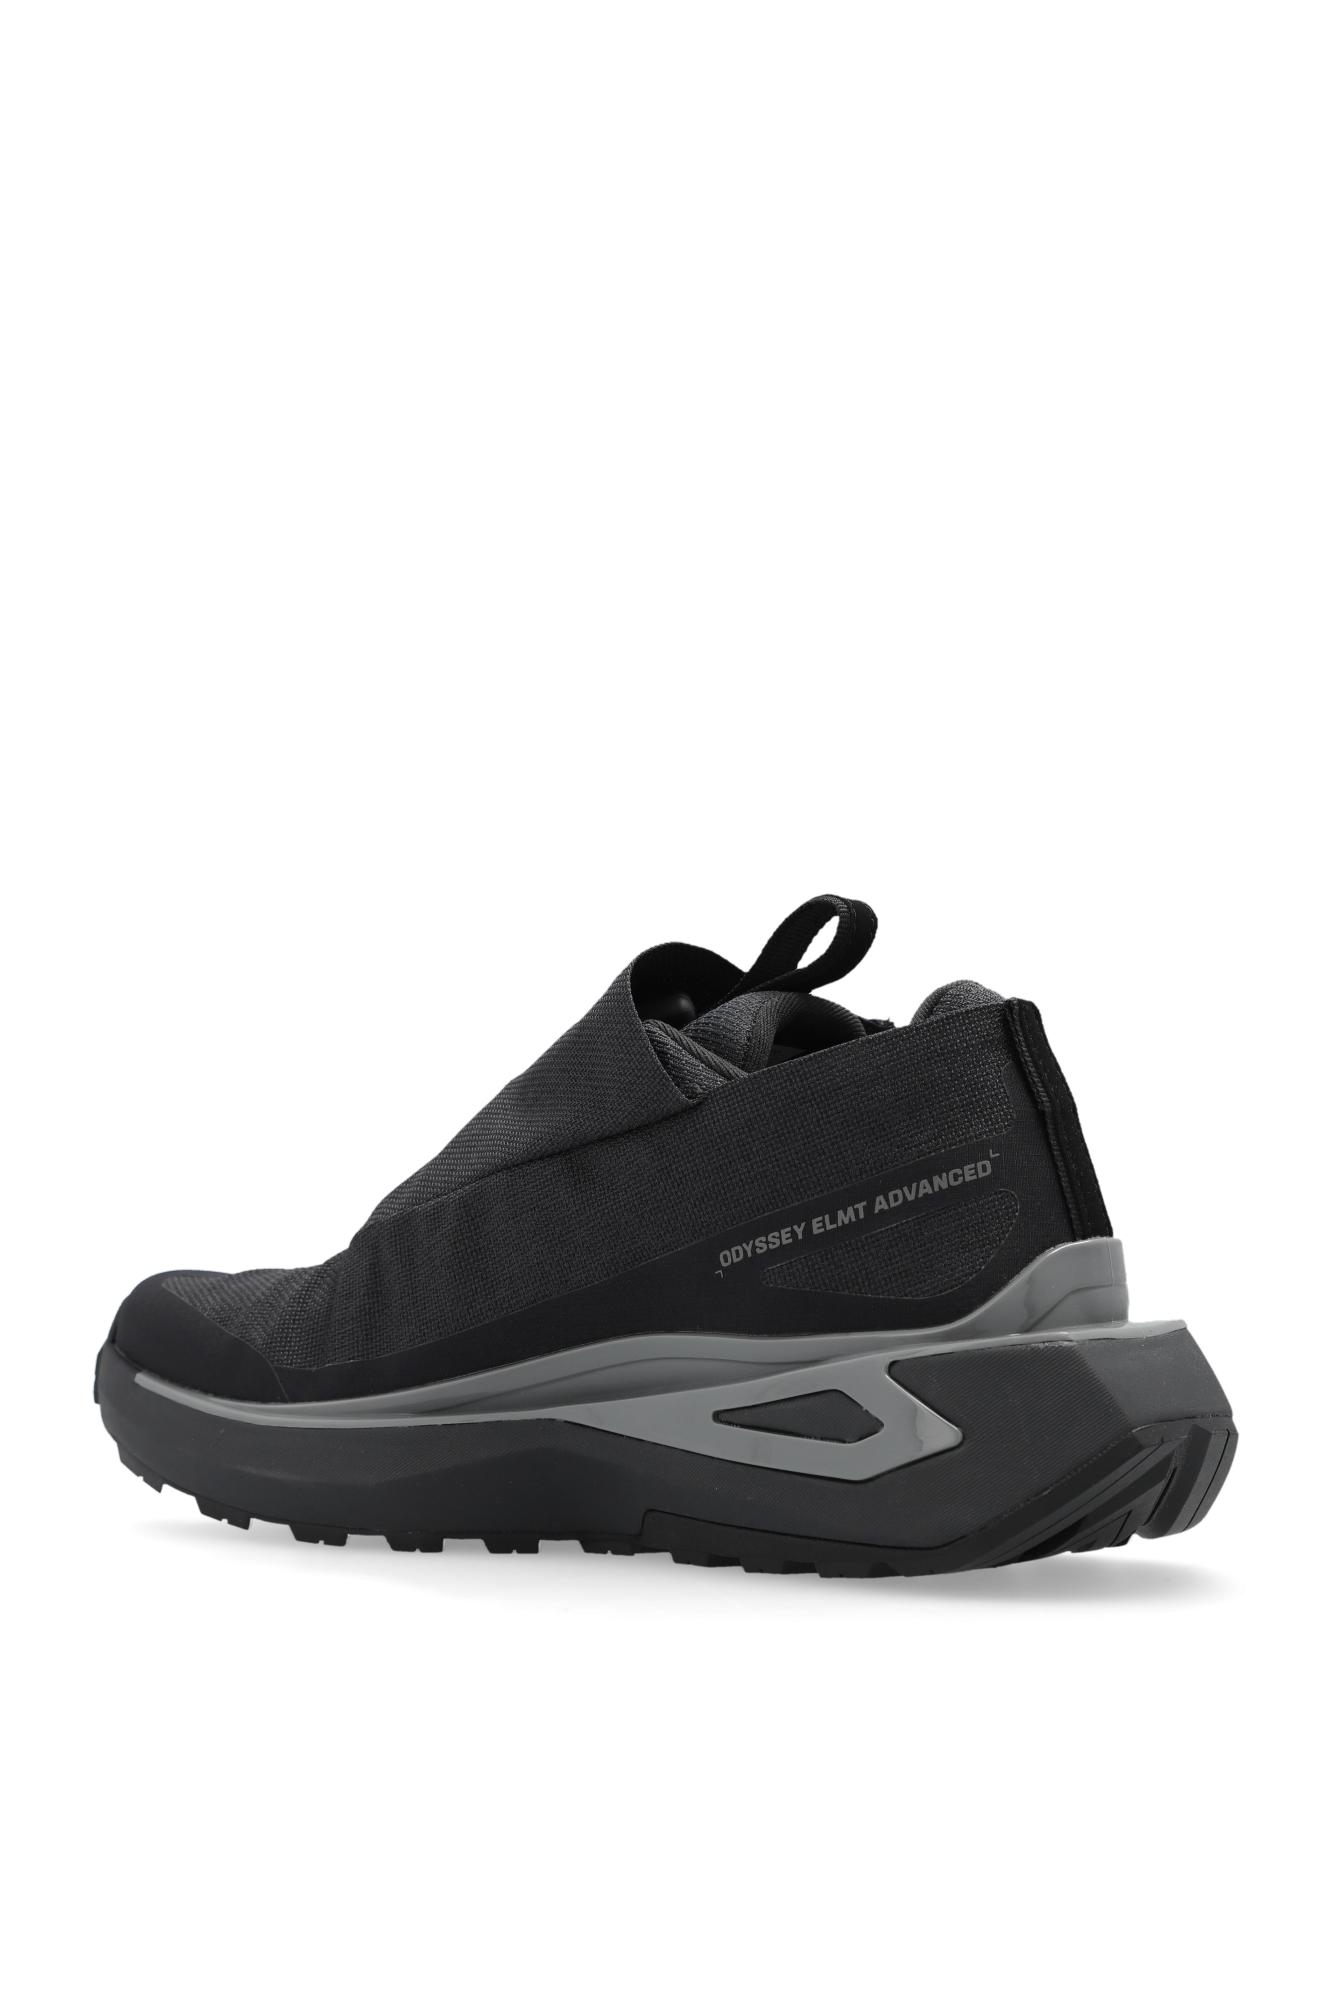 Salomon Odyssey Elmt Advanced Sneakers Black / Pewter / Phantom